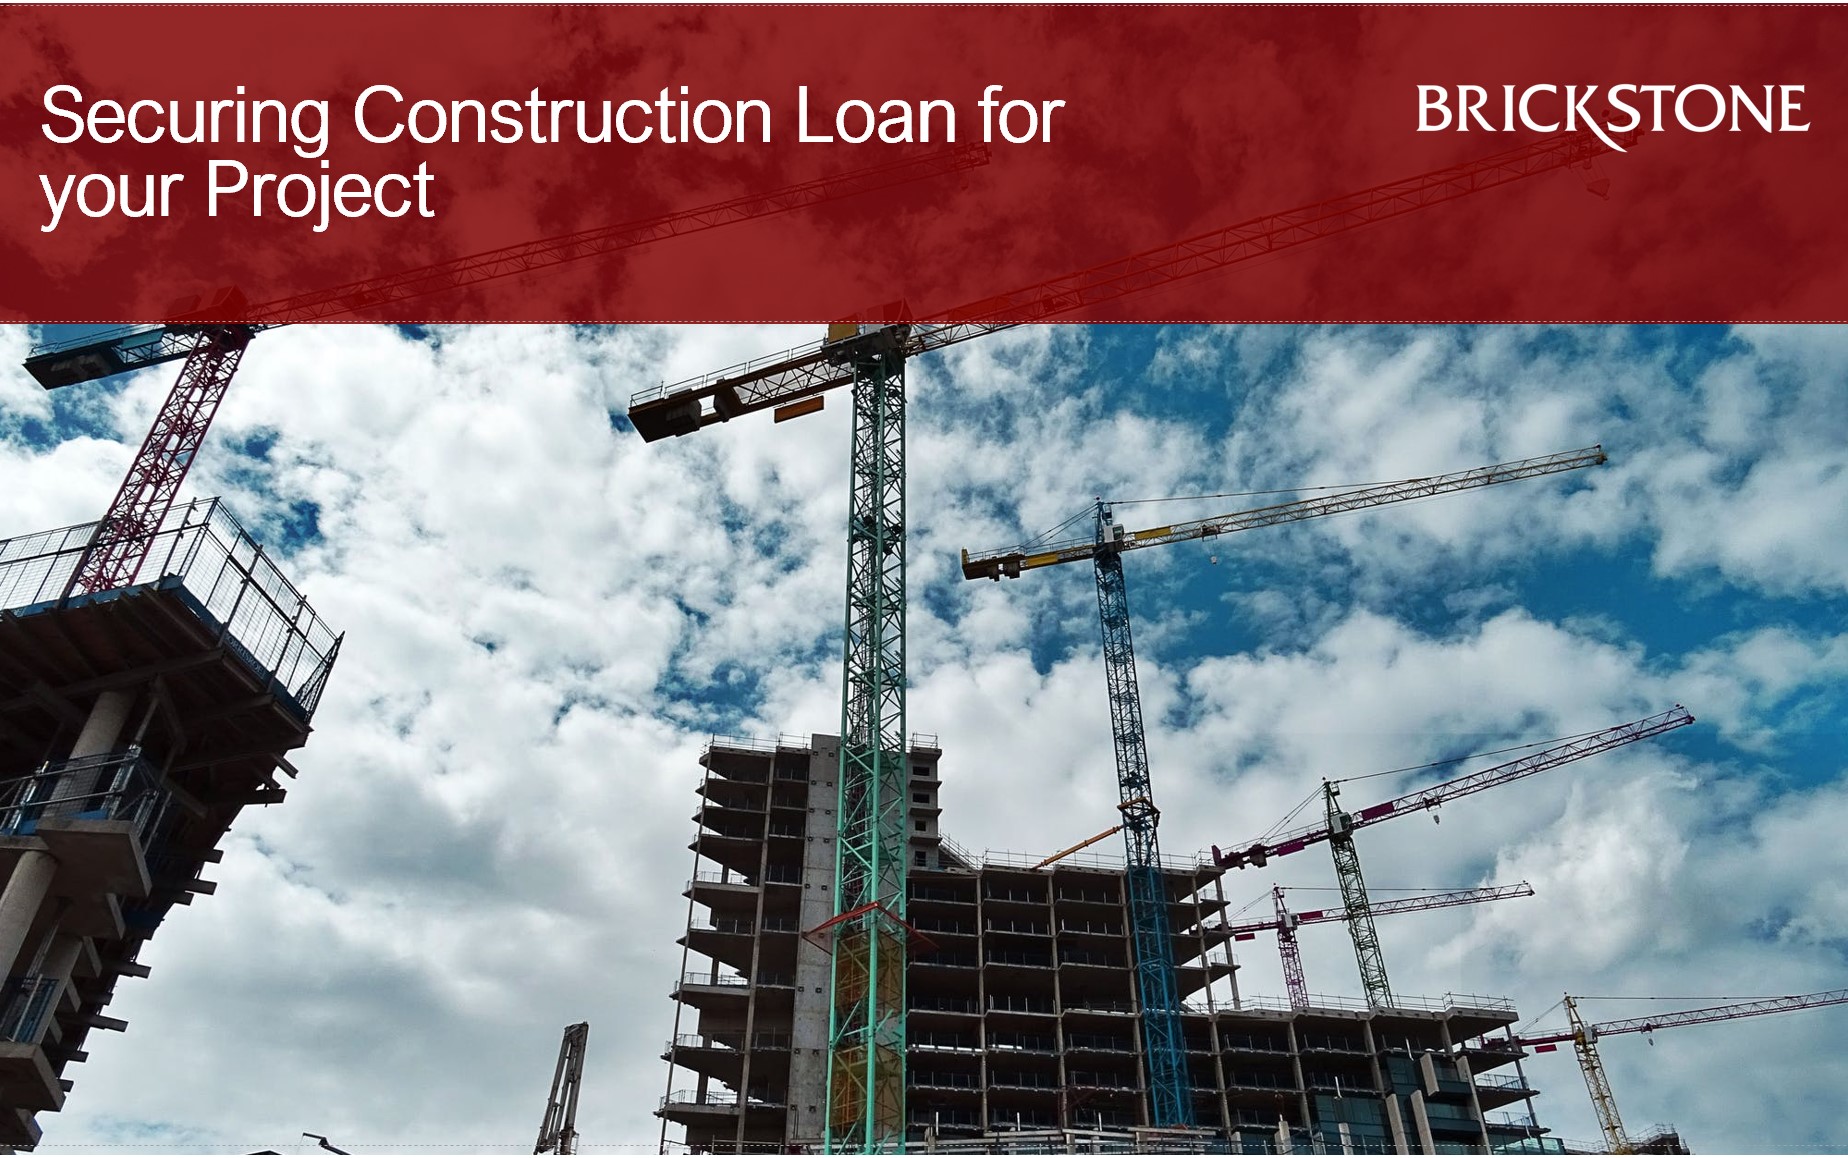 Securing Construction Loan_Brickstone Africa